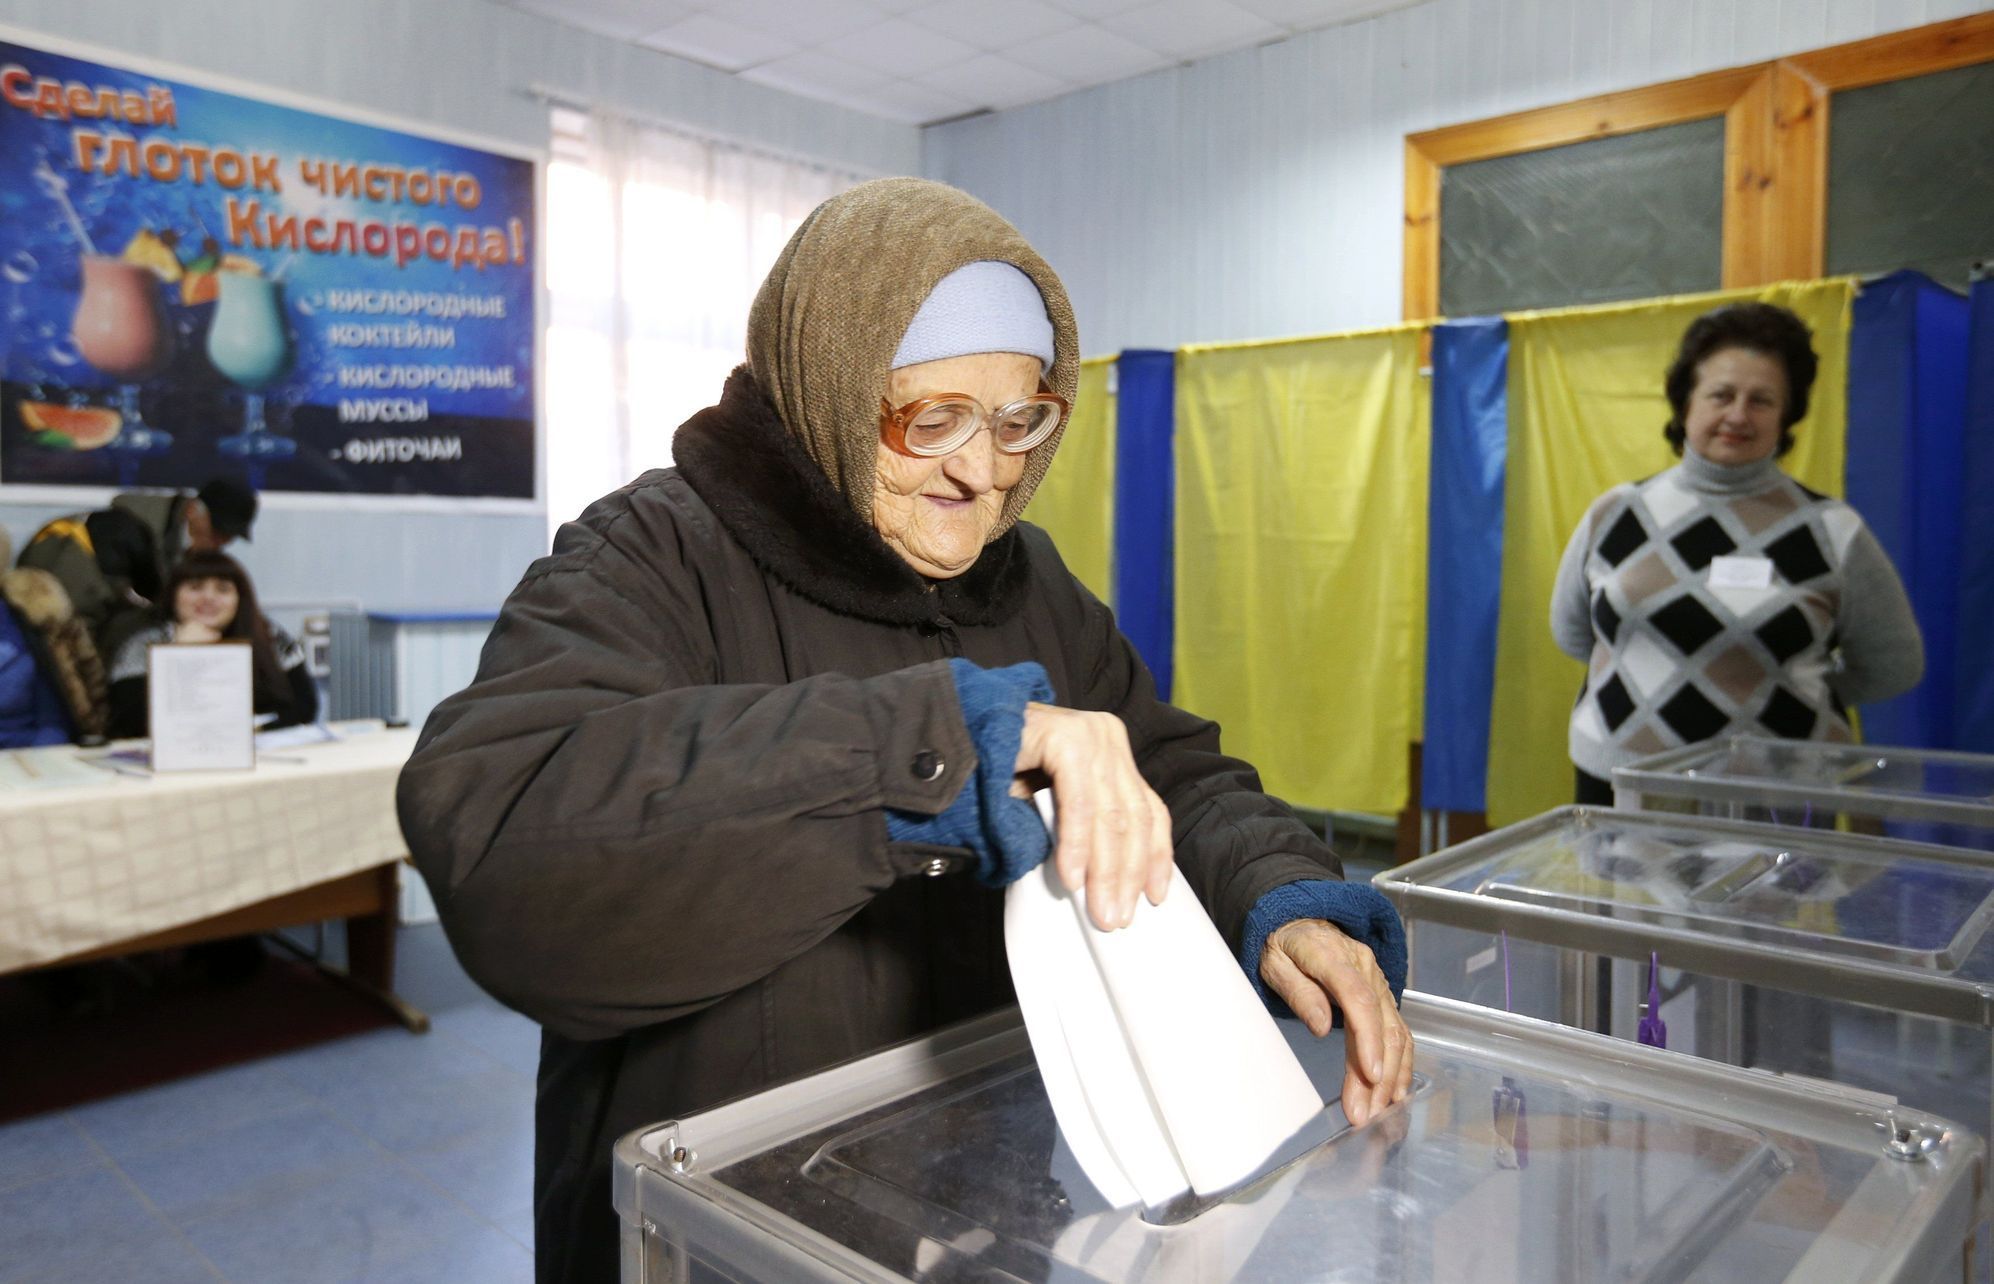 Volby do ukrajinského parlamentu